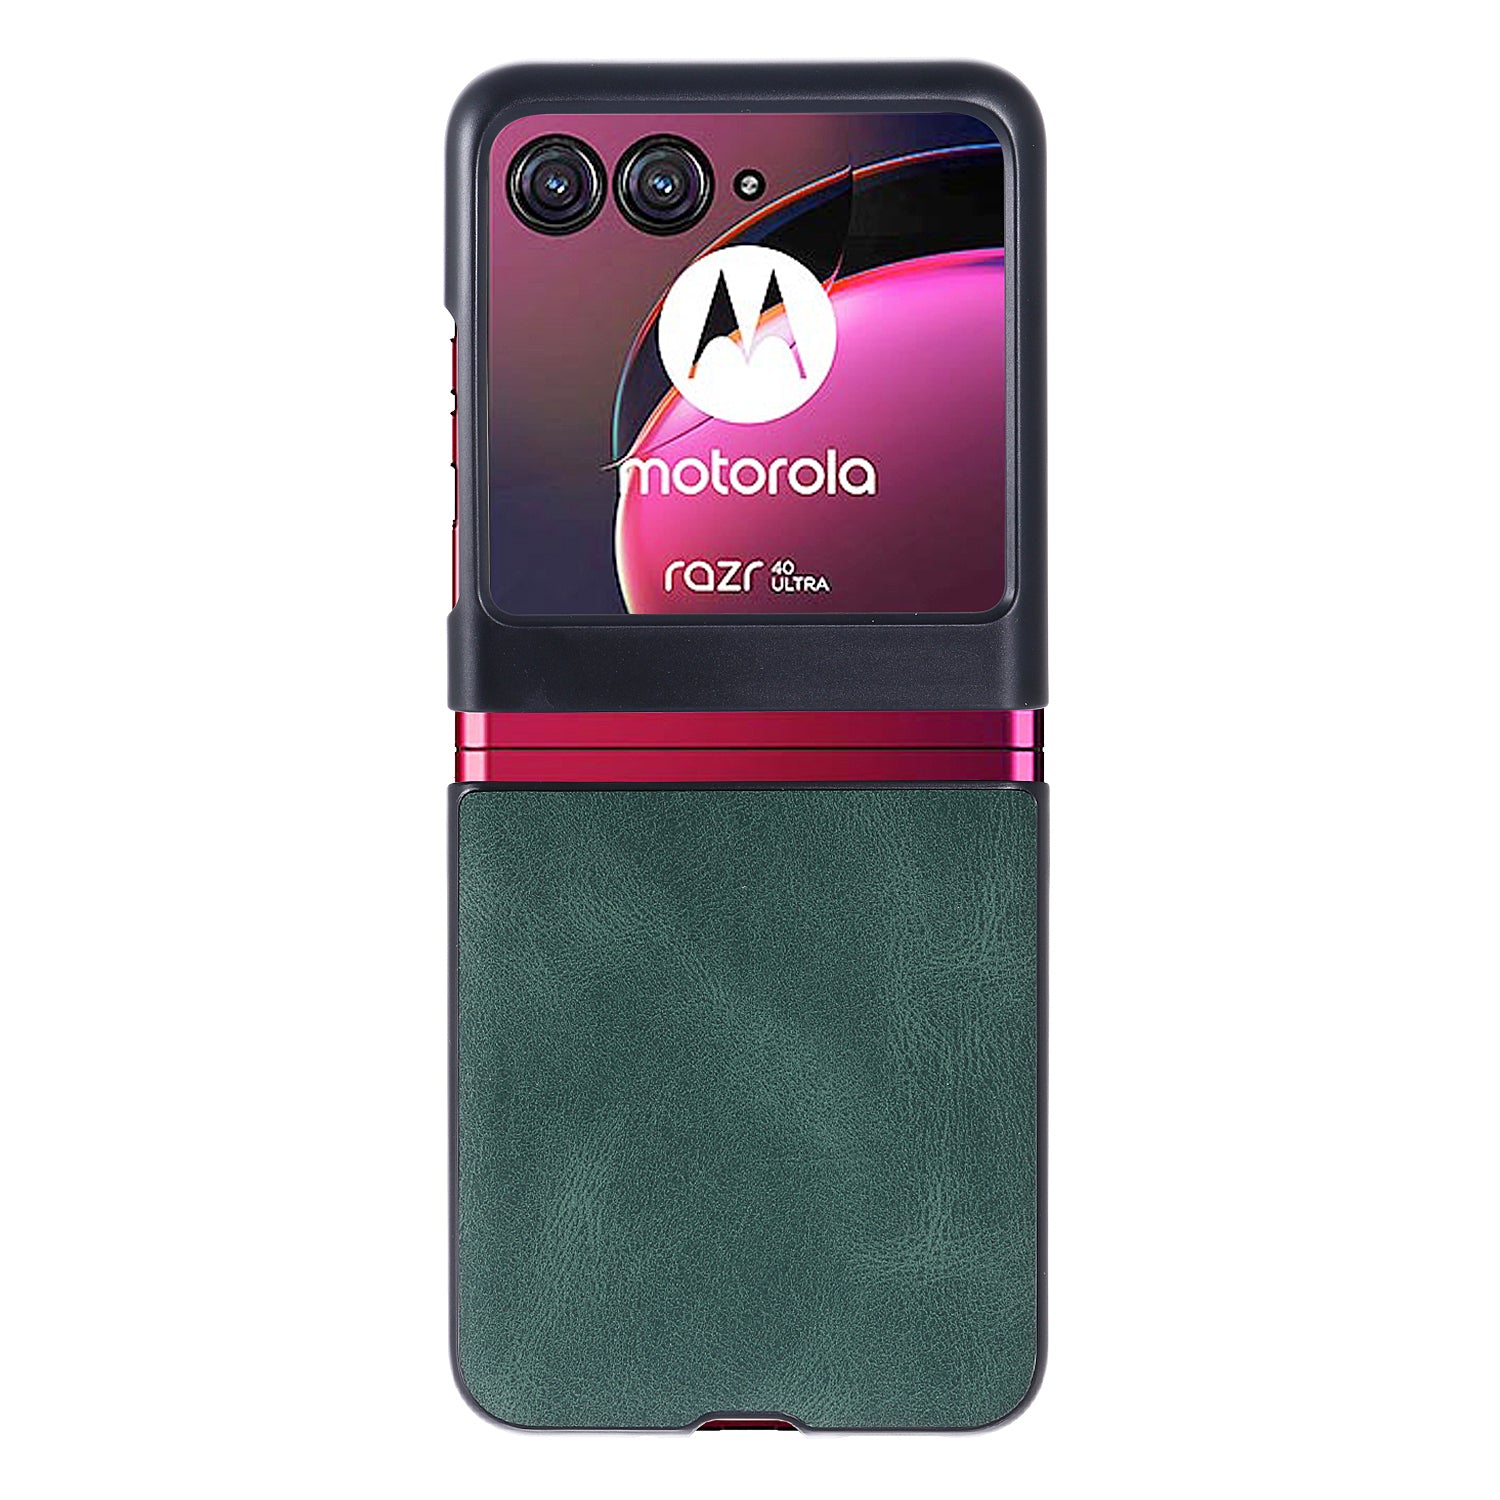 Uniqkart for Motorola Razr 40 Ultra 5G Vintage Phone Case PU Leather Coated Hard PC Protective Cover - Green